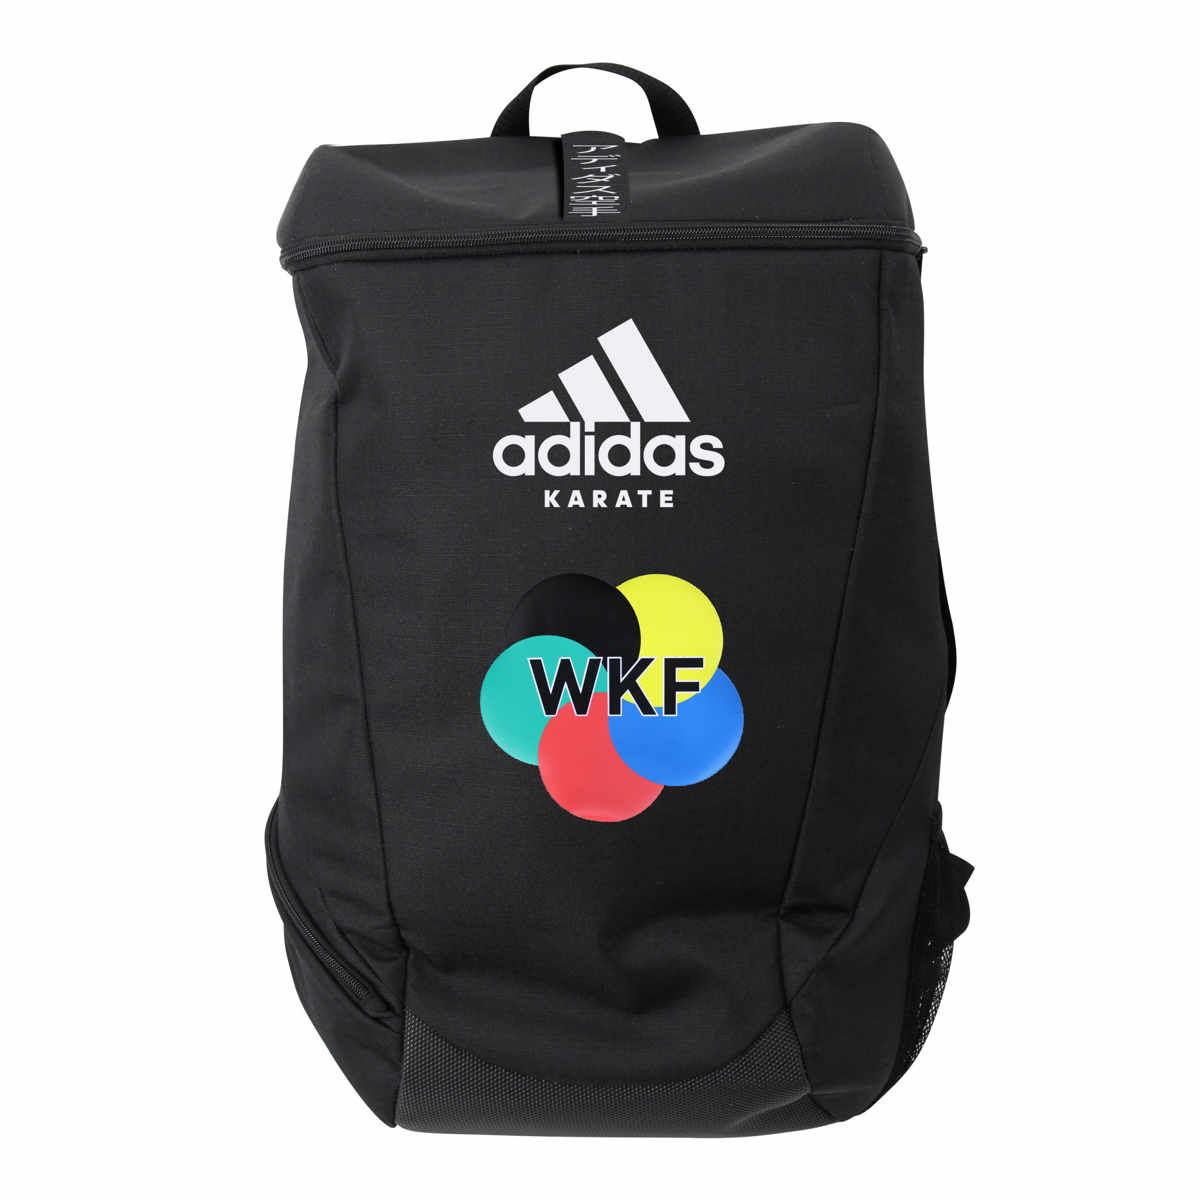 monte Vesubio Betsy Trotwood Produce Mochila Adidas Sport BackPack con logo WKF